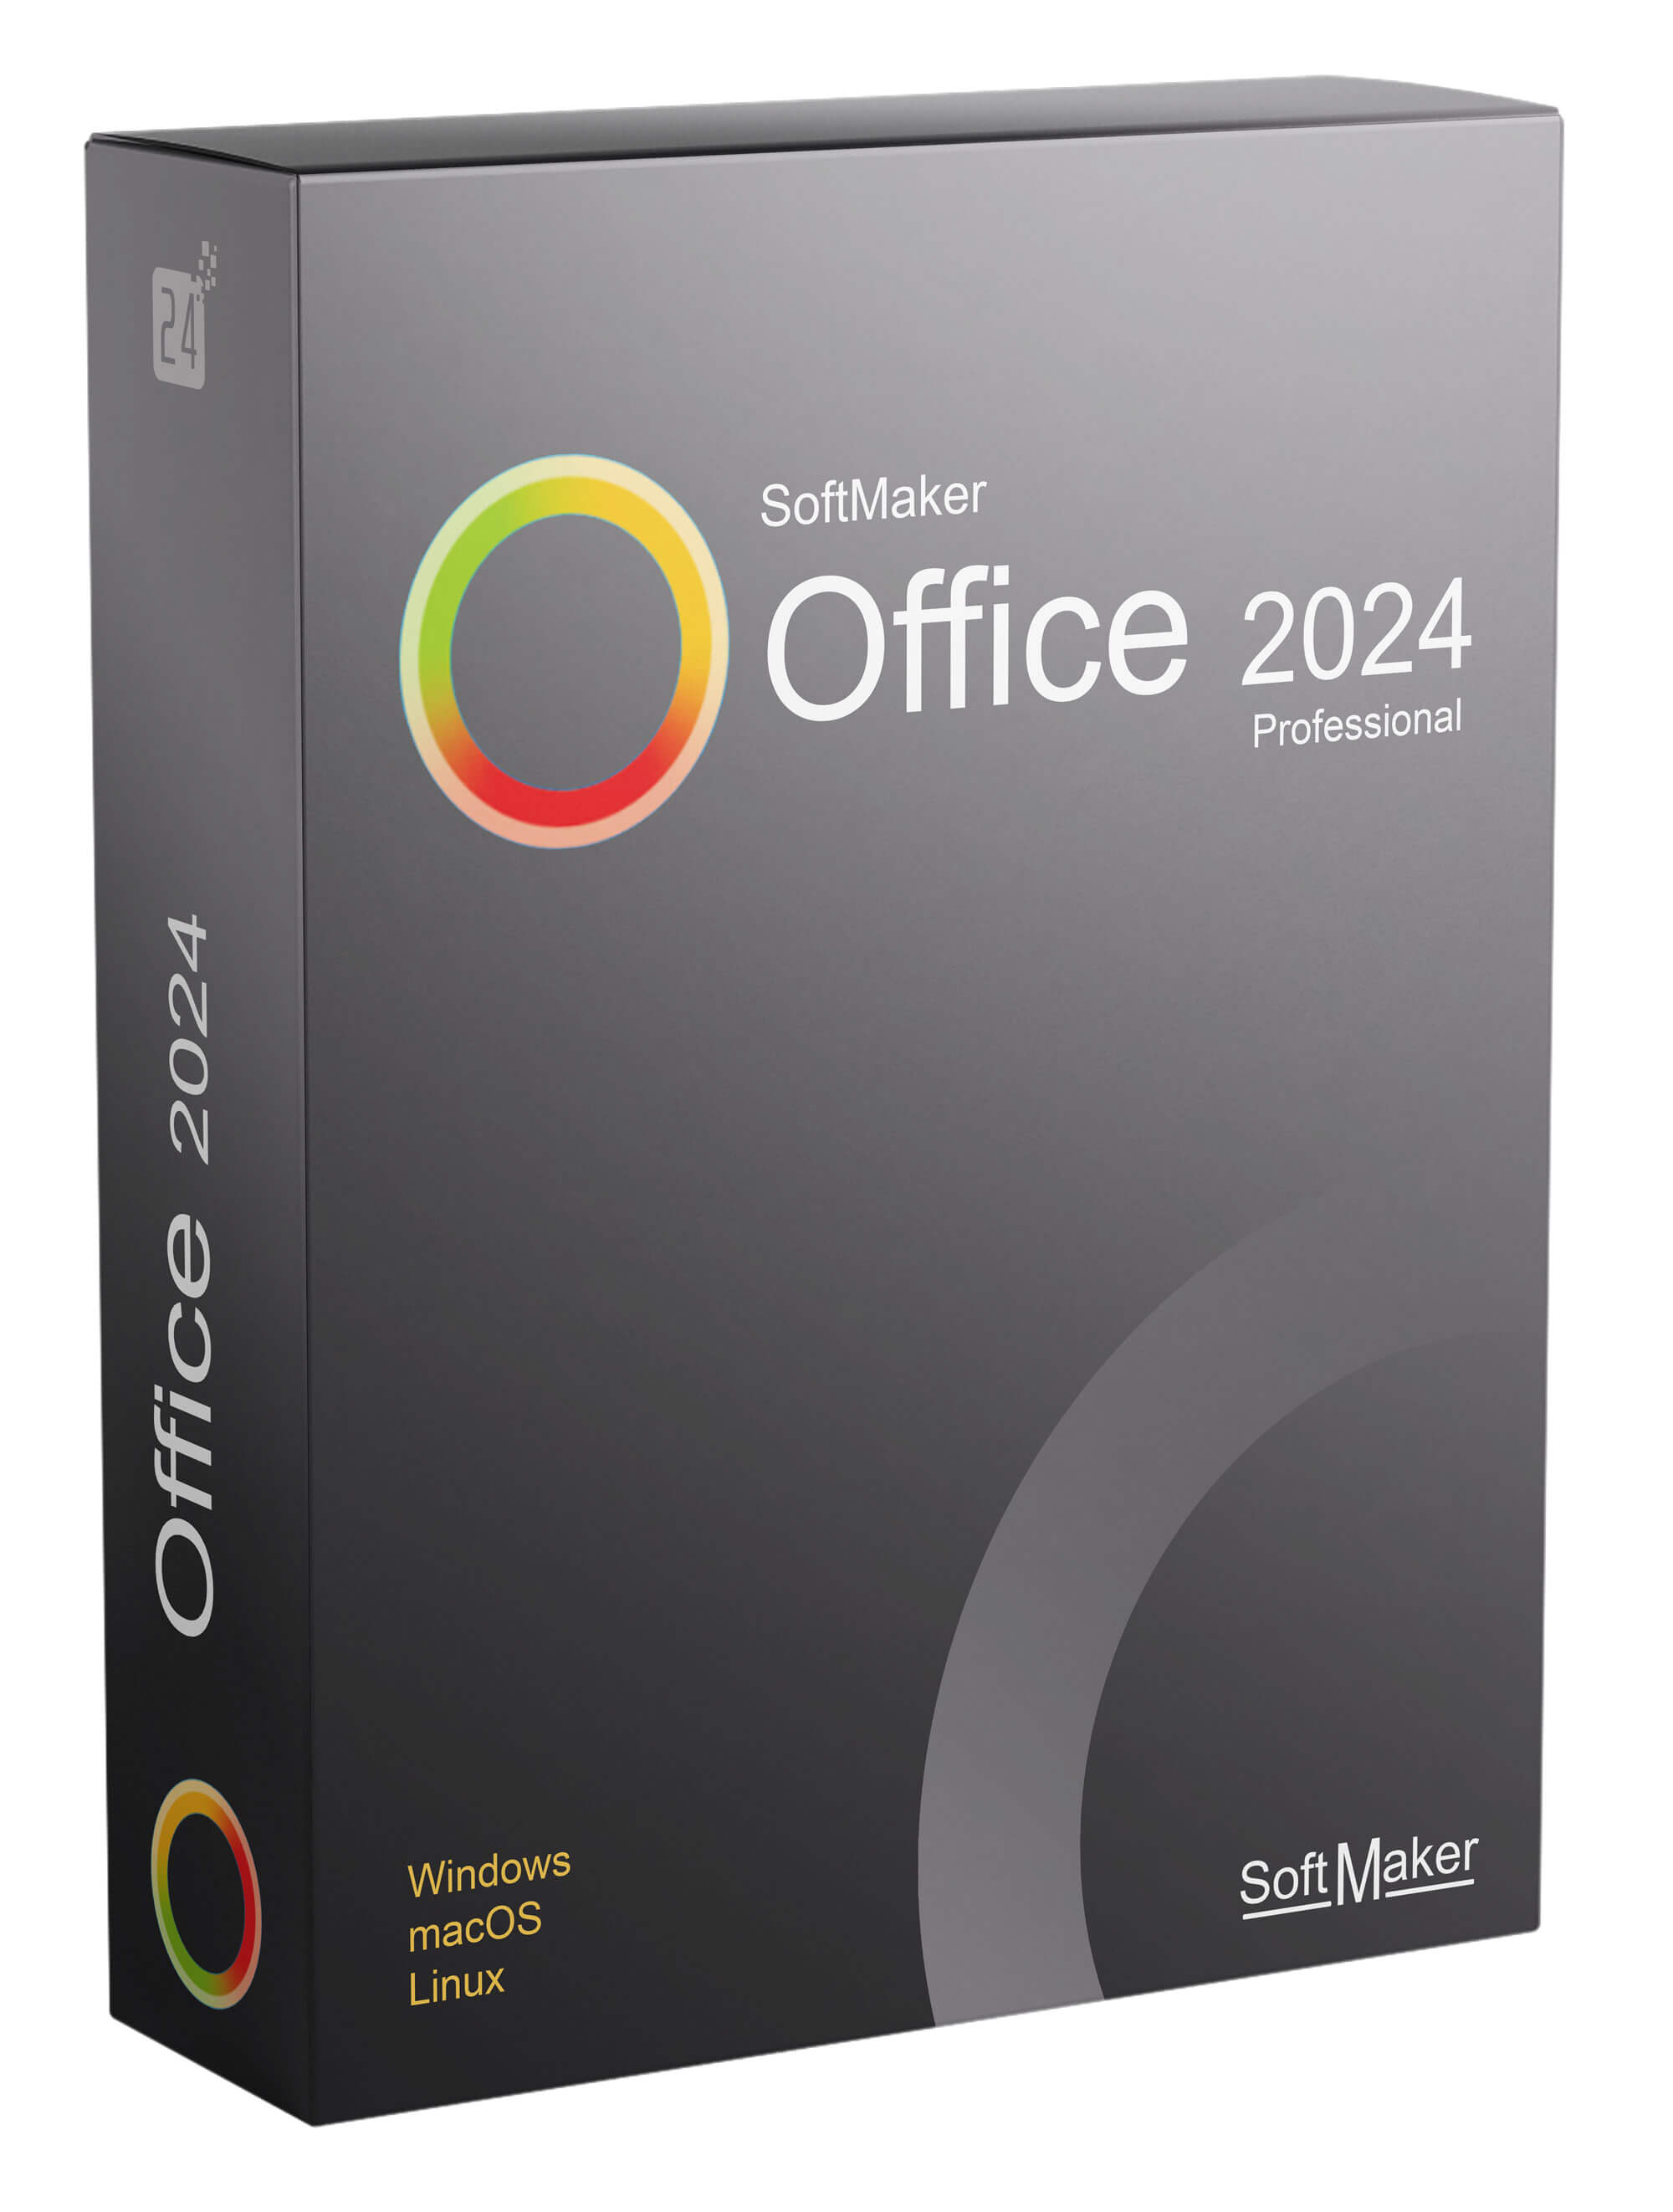 SoftMaker Office Professional 2024 rev.1204.0902 free downloads